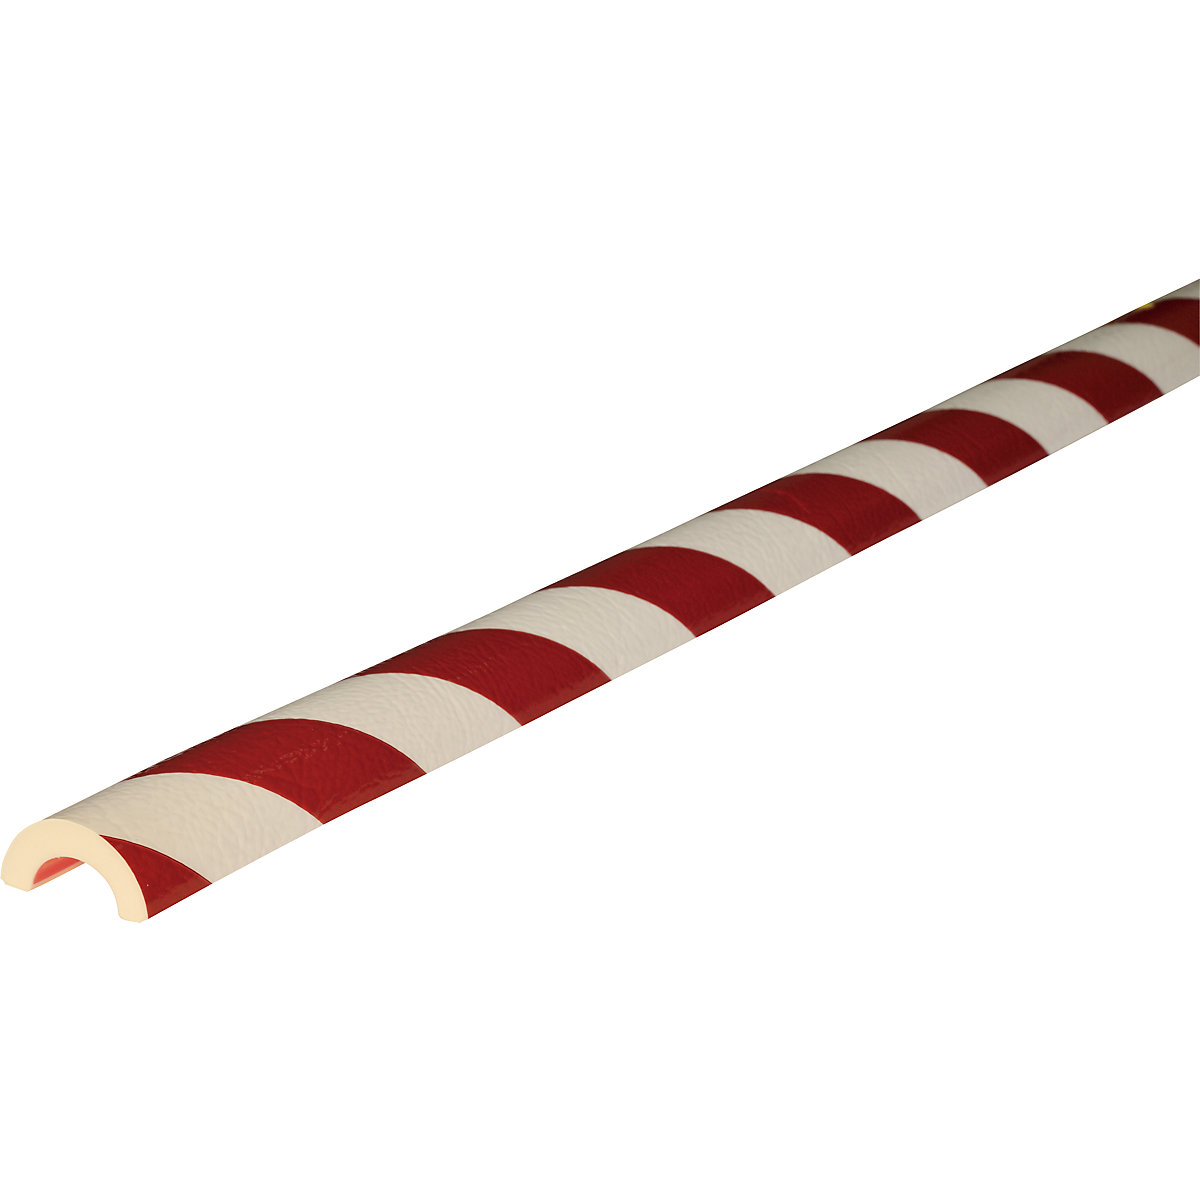 Knuffi® csővédő – SHG, R30 típus, 1 m-es darab, piros / fehér-11